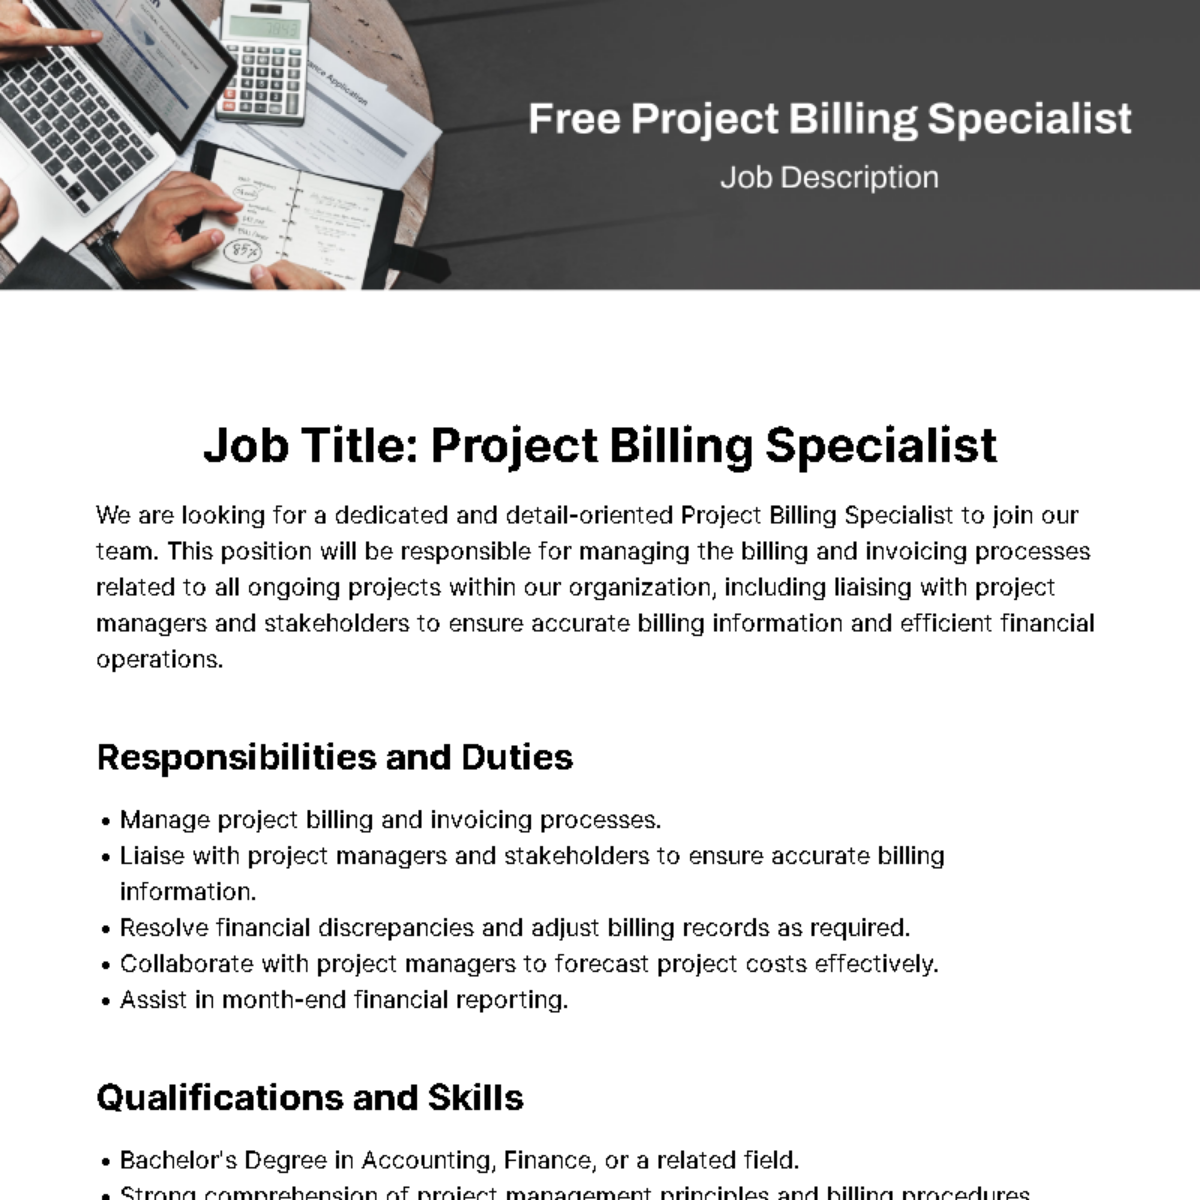 Free Project Billing Specialist Job Description Template